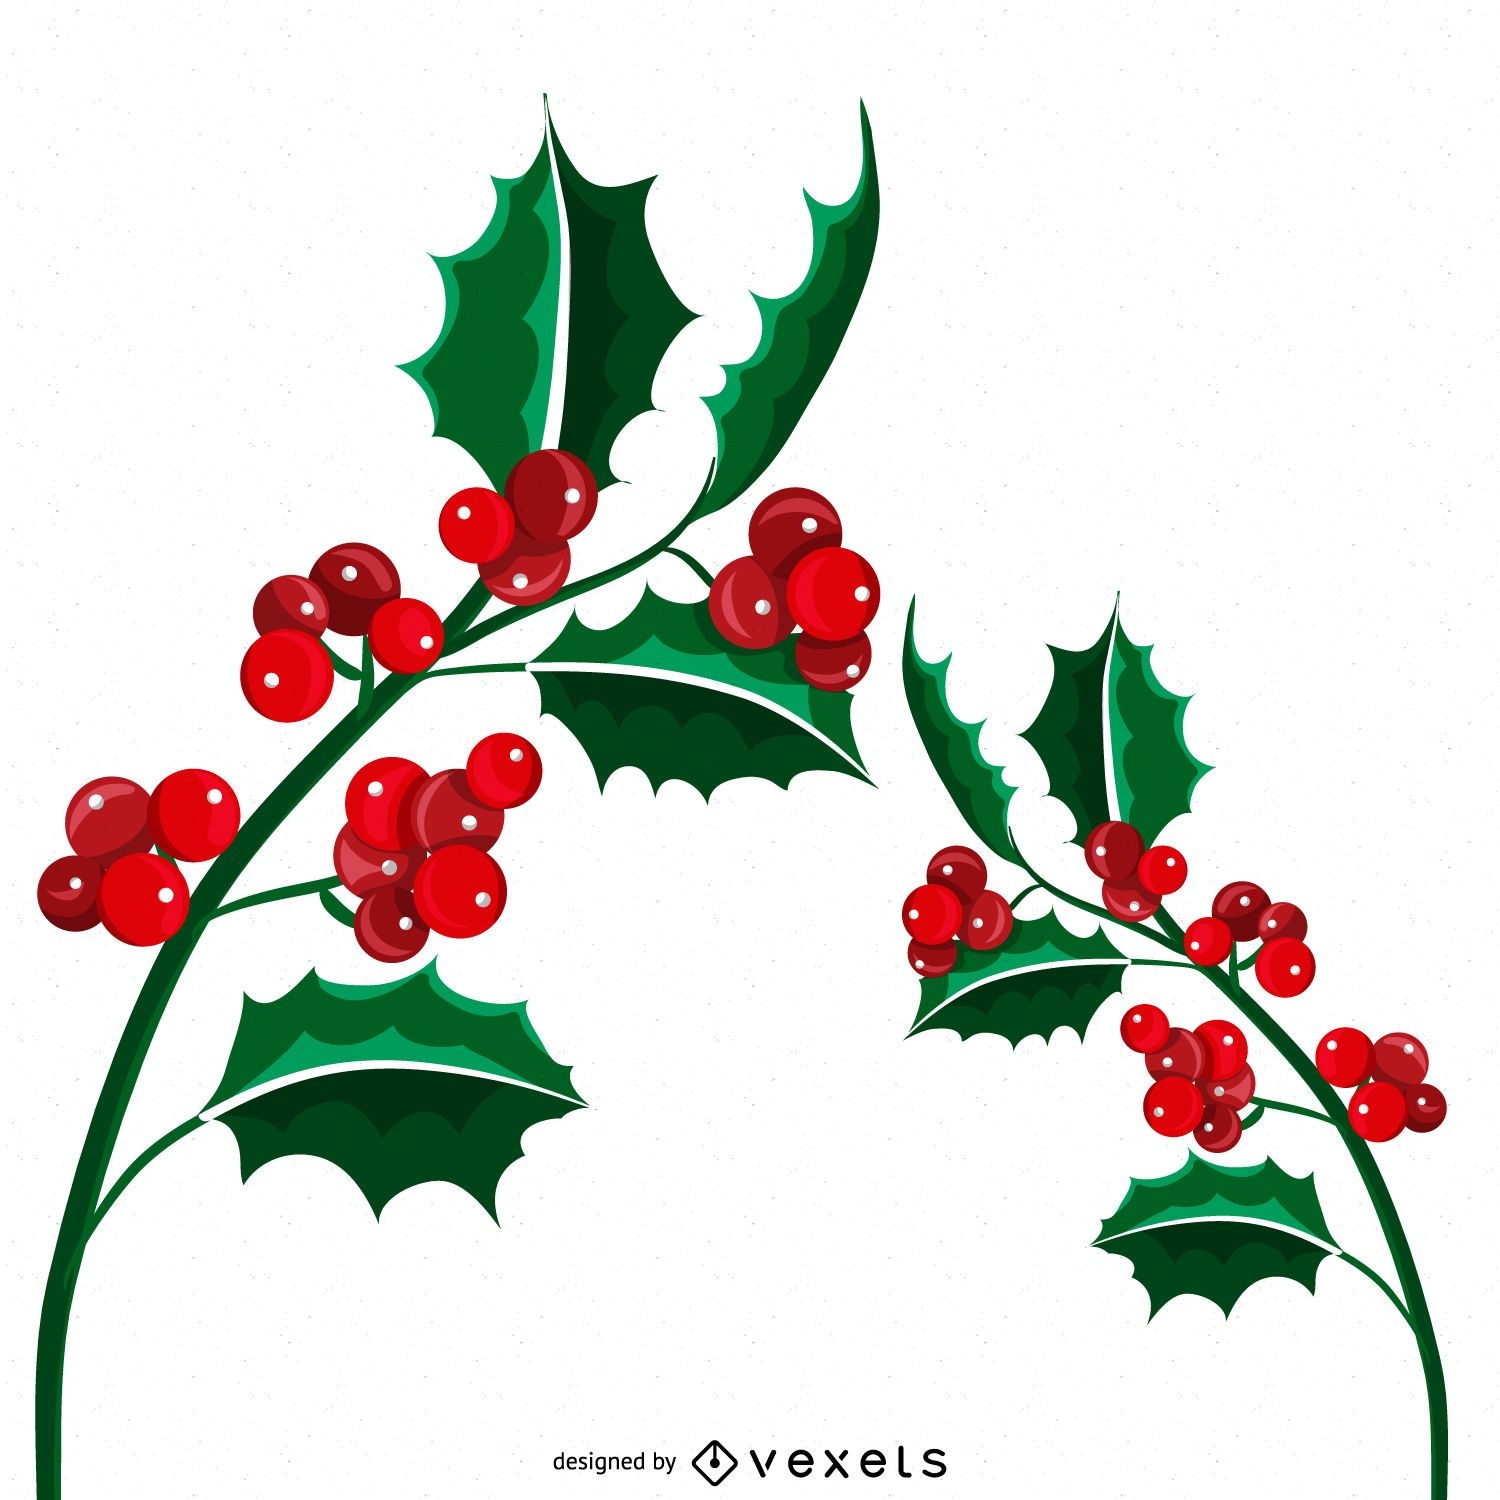 Isolated Christmas mistletoe illustration